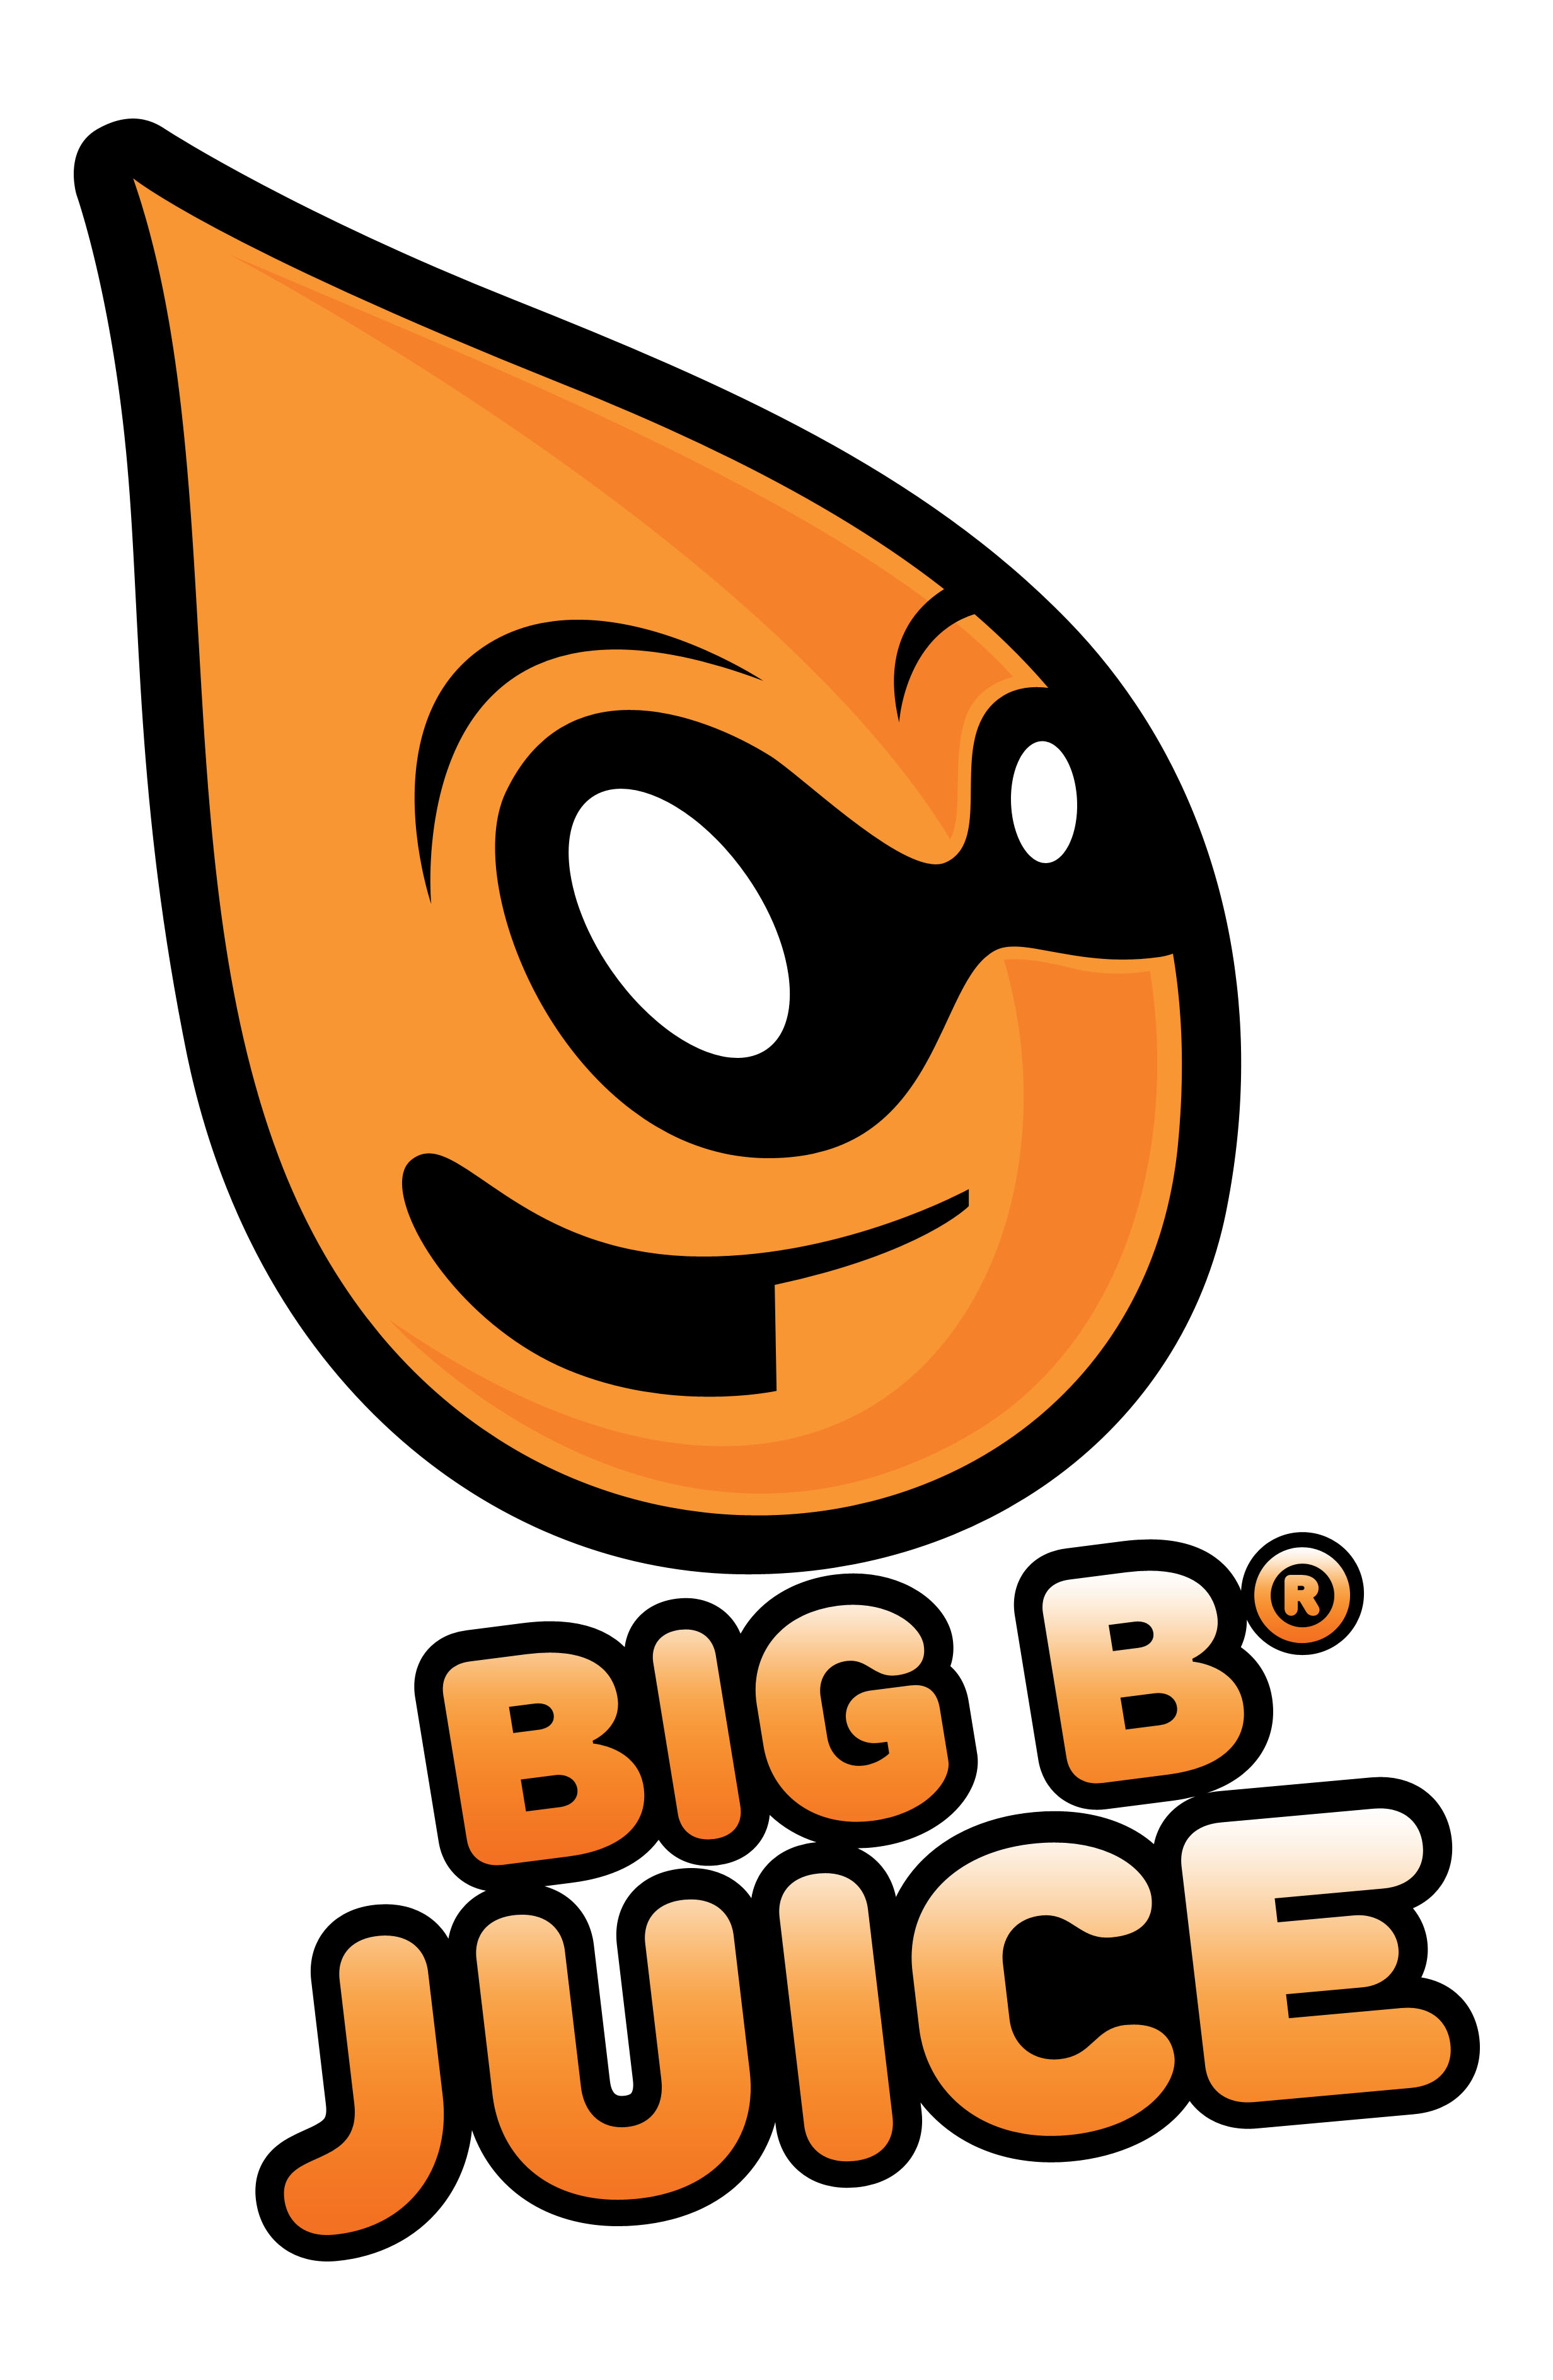 BIG B JUICE